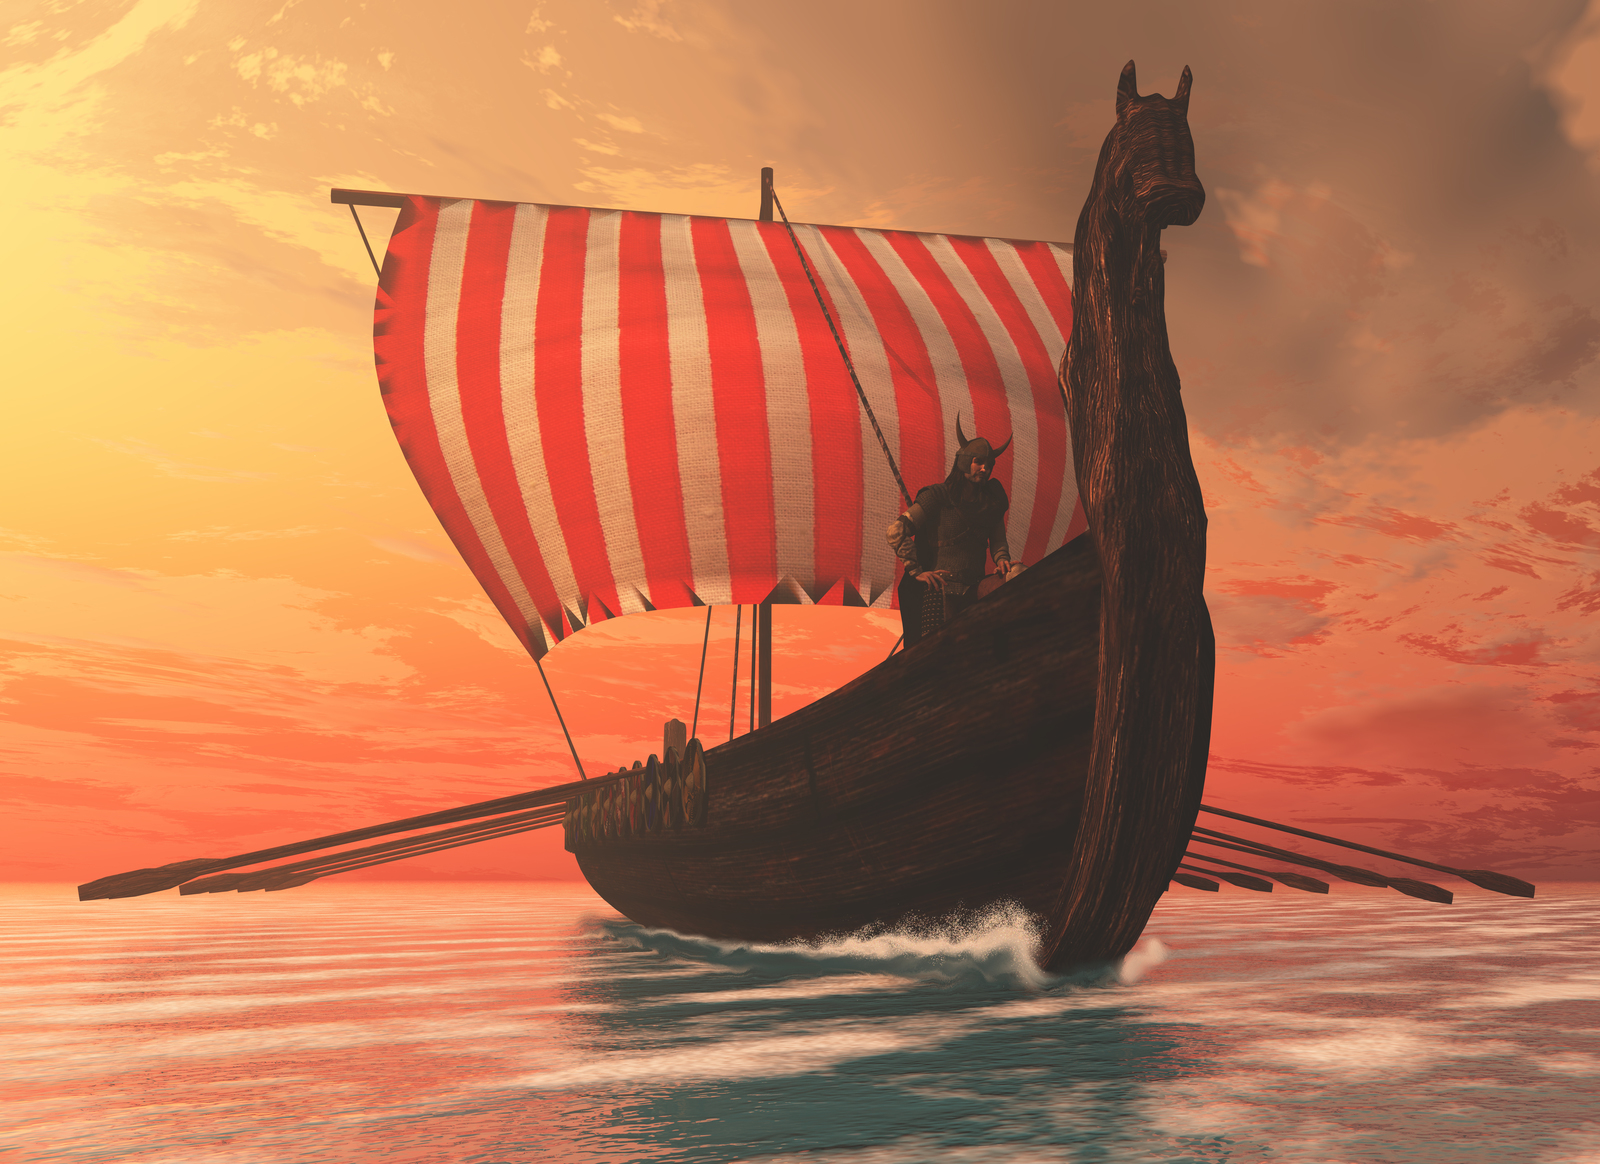 An illustration of a Viking Ship